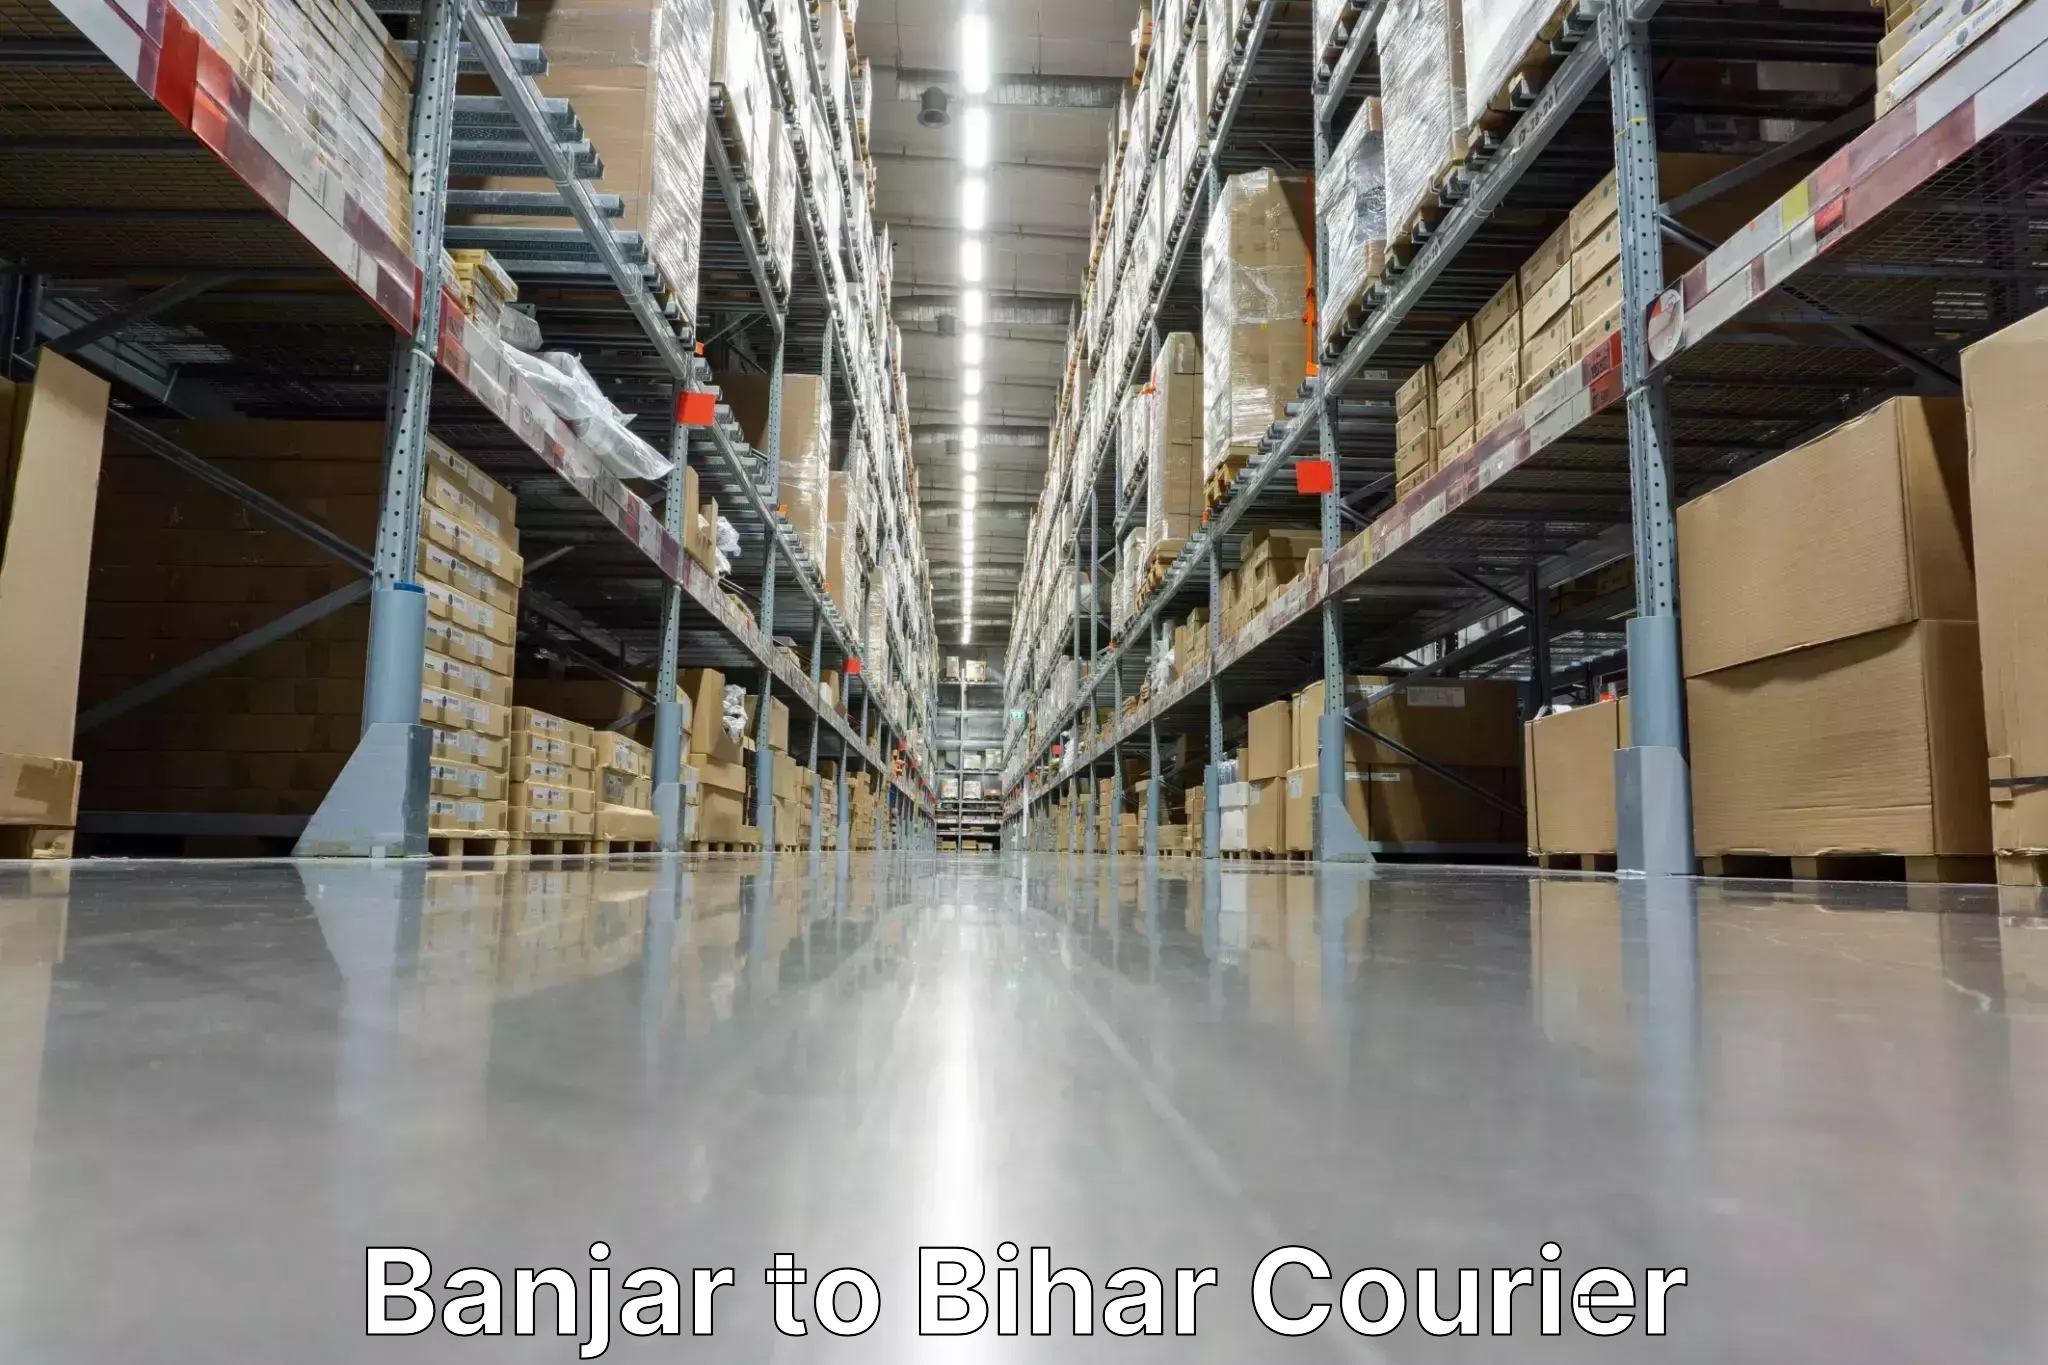 Courier service comparison Banjar to Rajgir